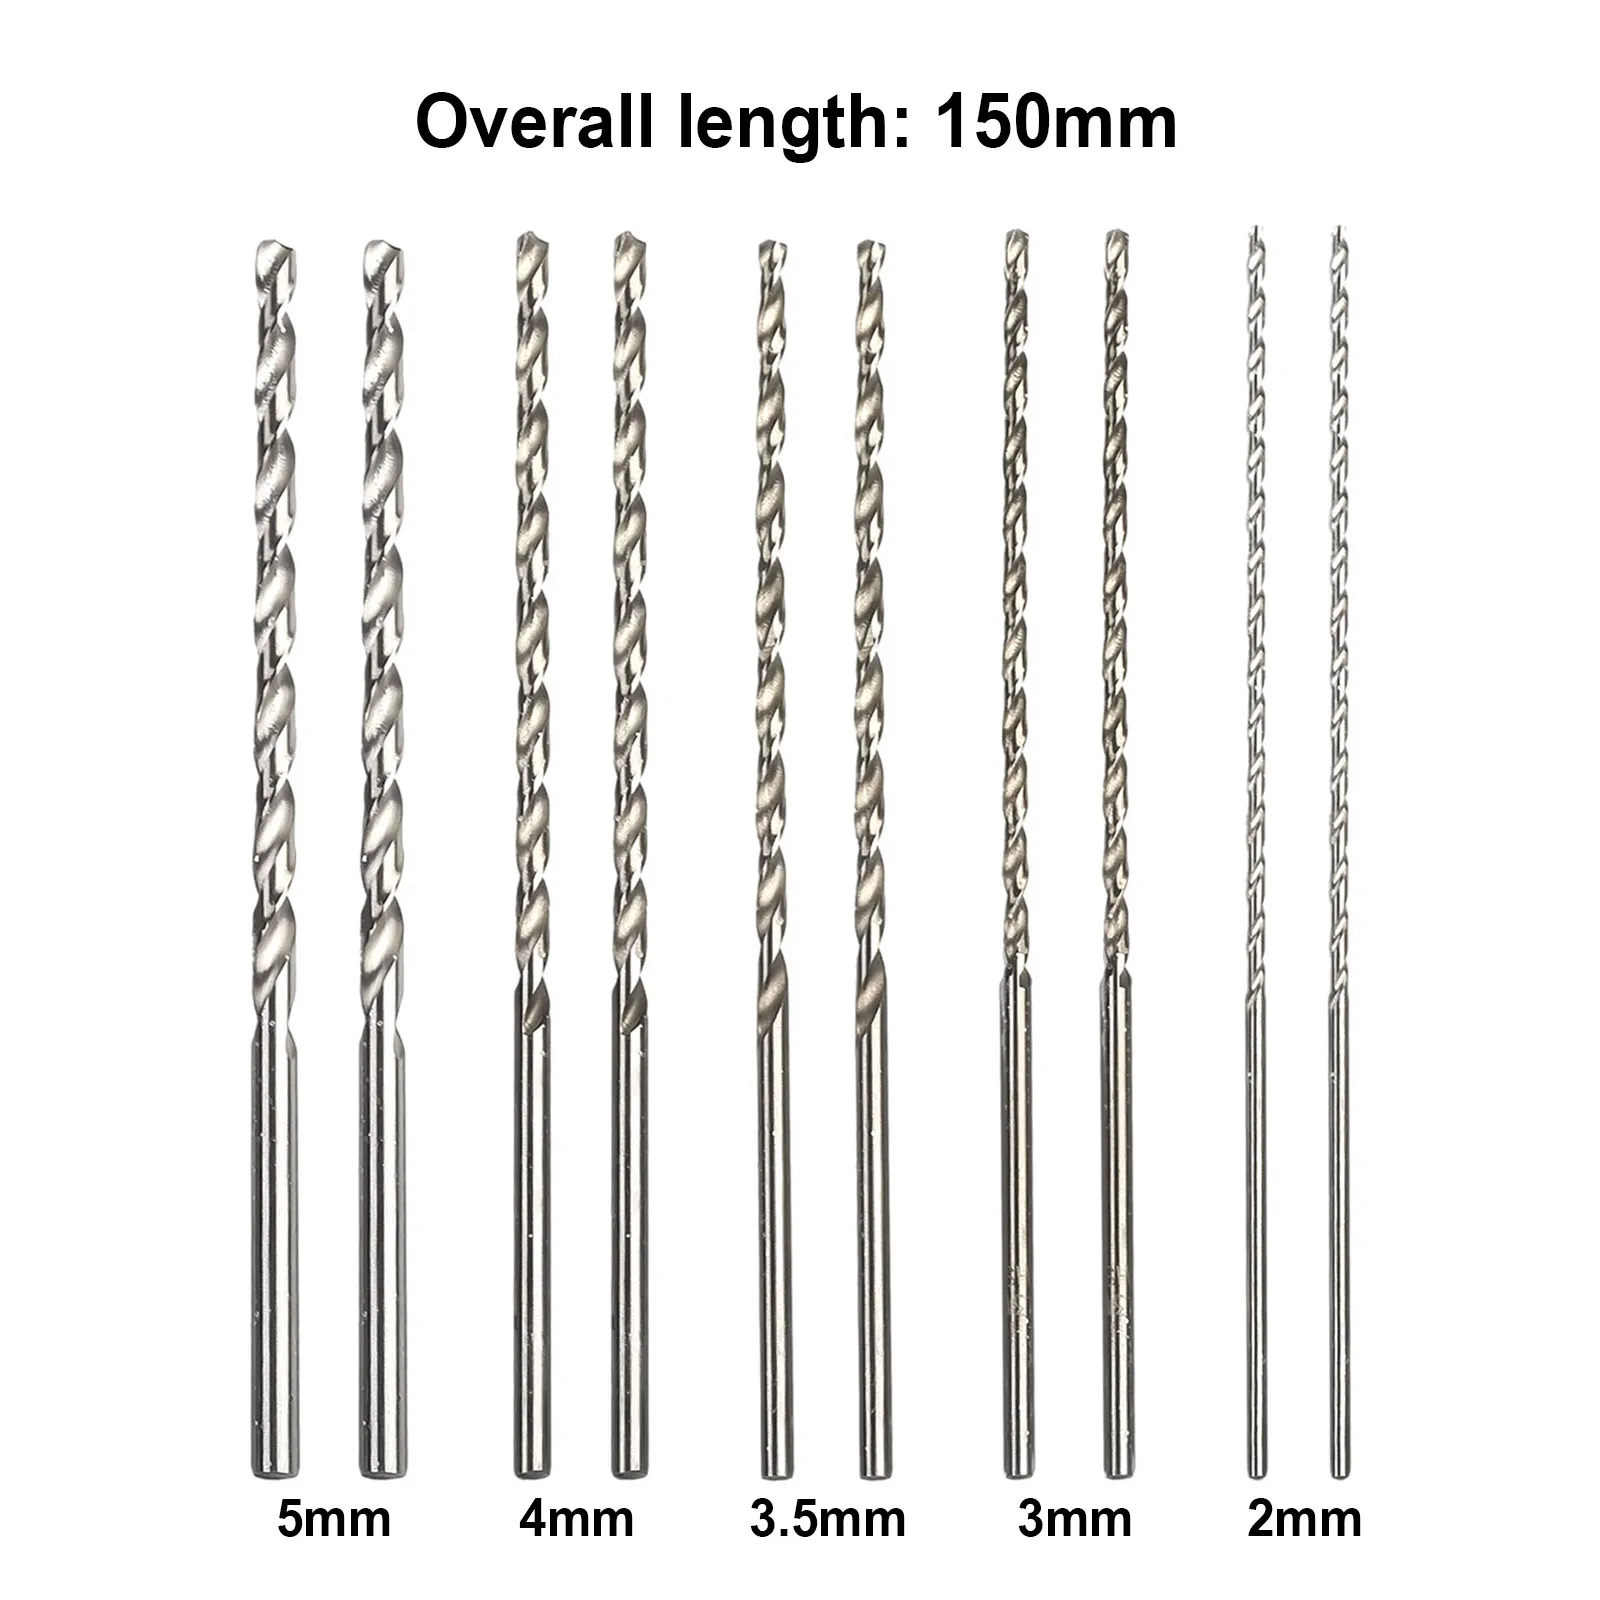 10Pcs HSS High Speed Steel Drill Bit Set Straight Shank Auger Bits/150mm Long For Dremel Rotary-Tools 2mm 3mm 3.5mm 4mm 5mm